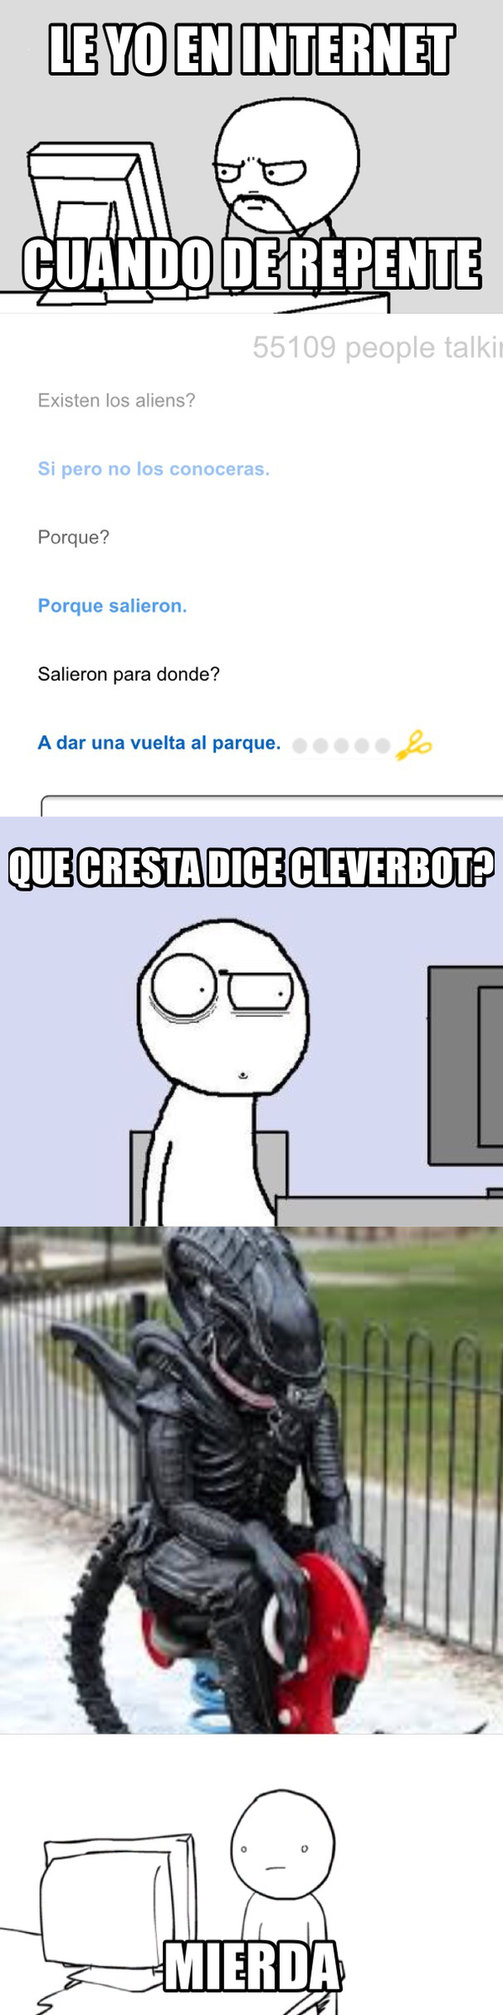 Cleverbot se fumo uno bueno - meme